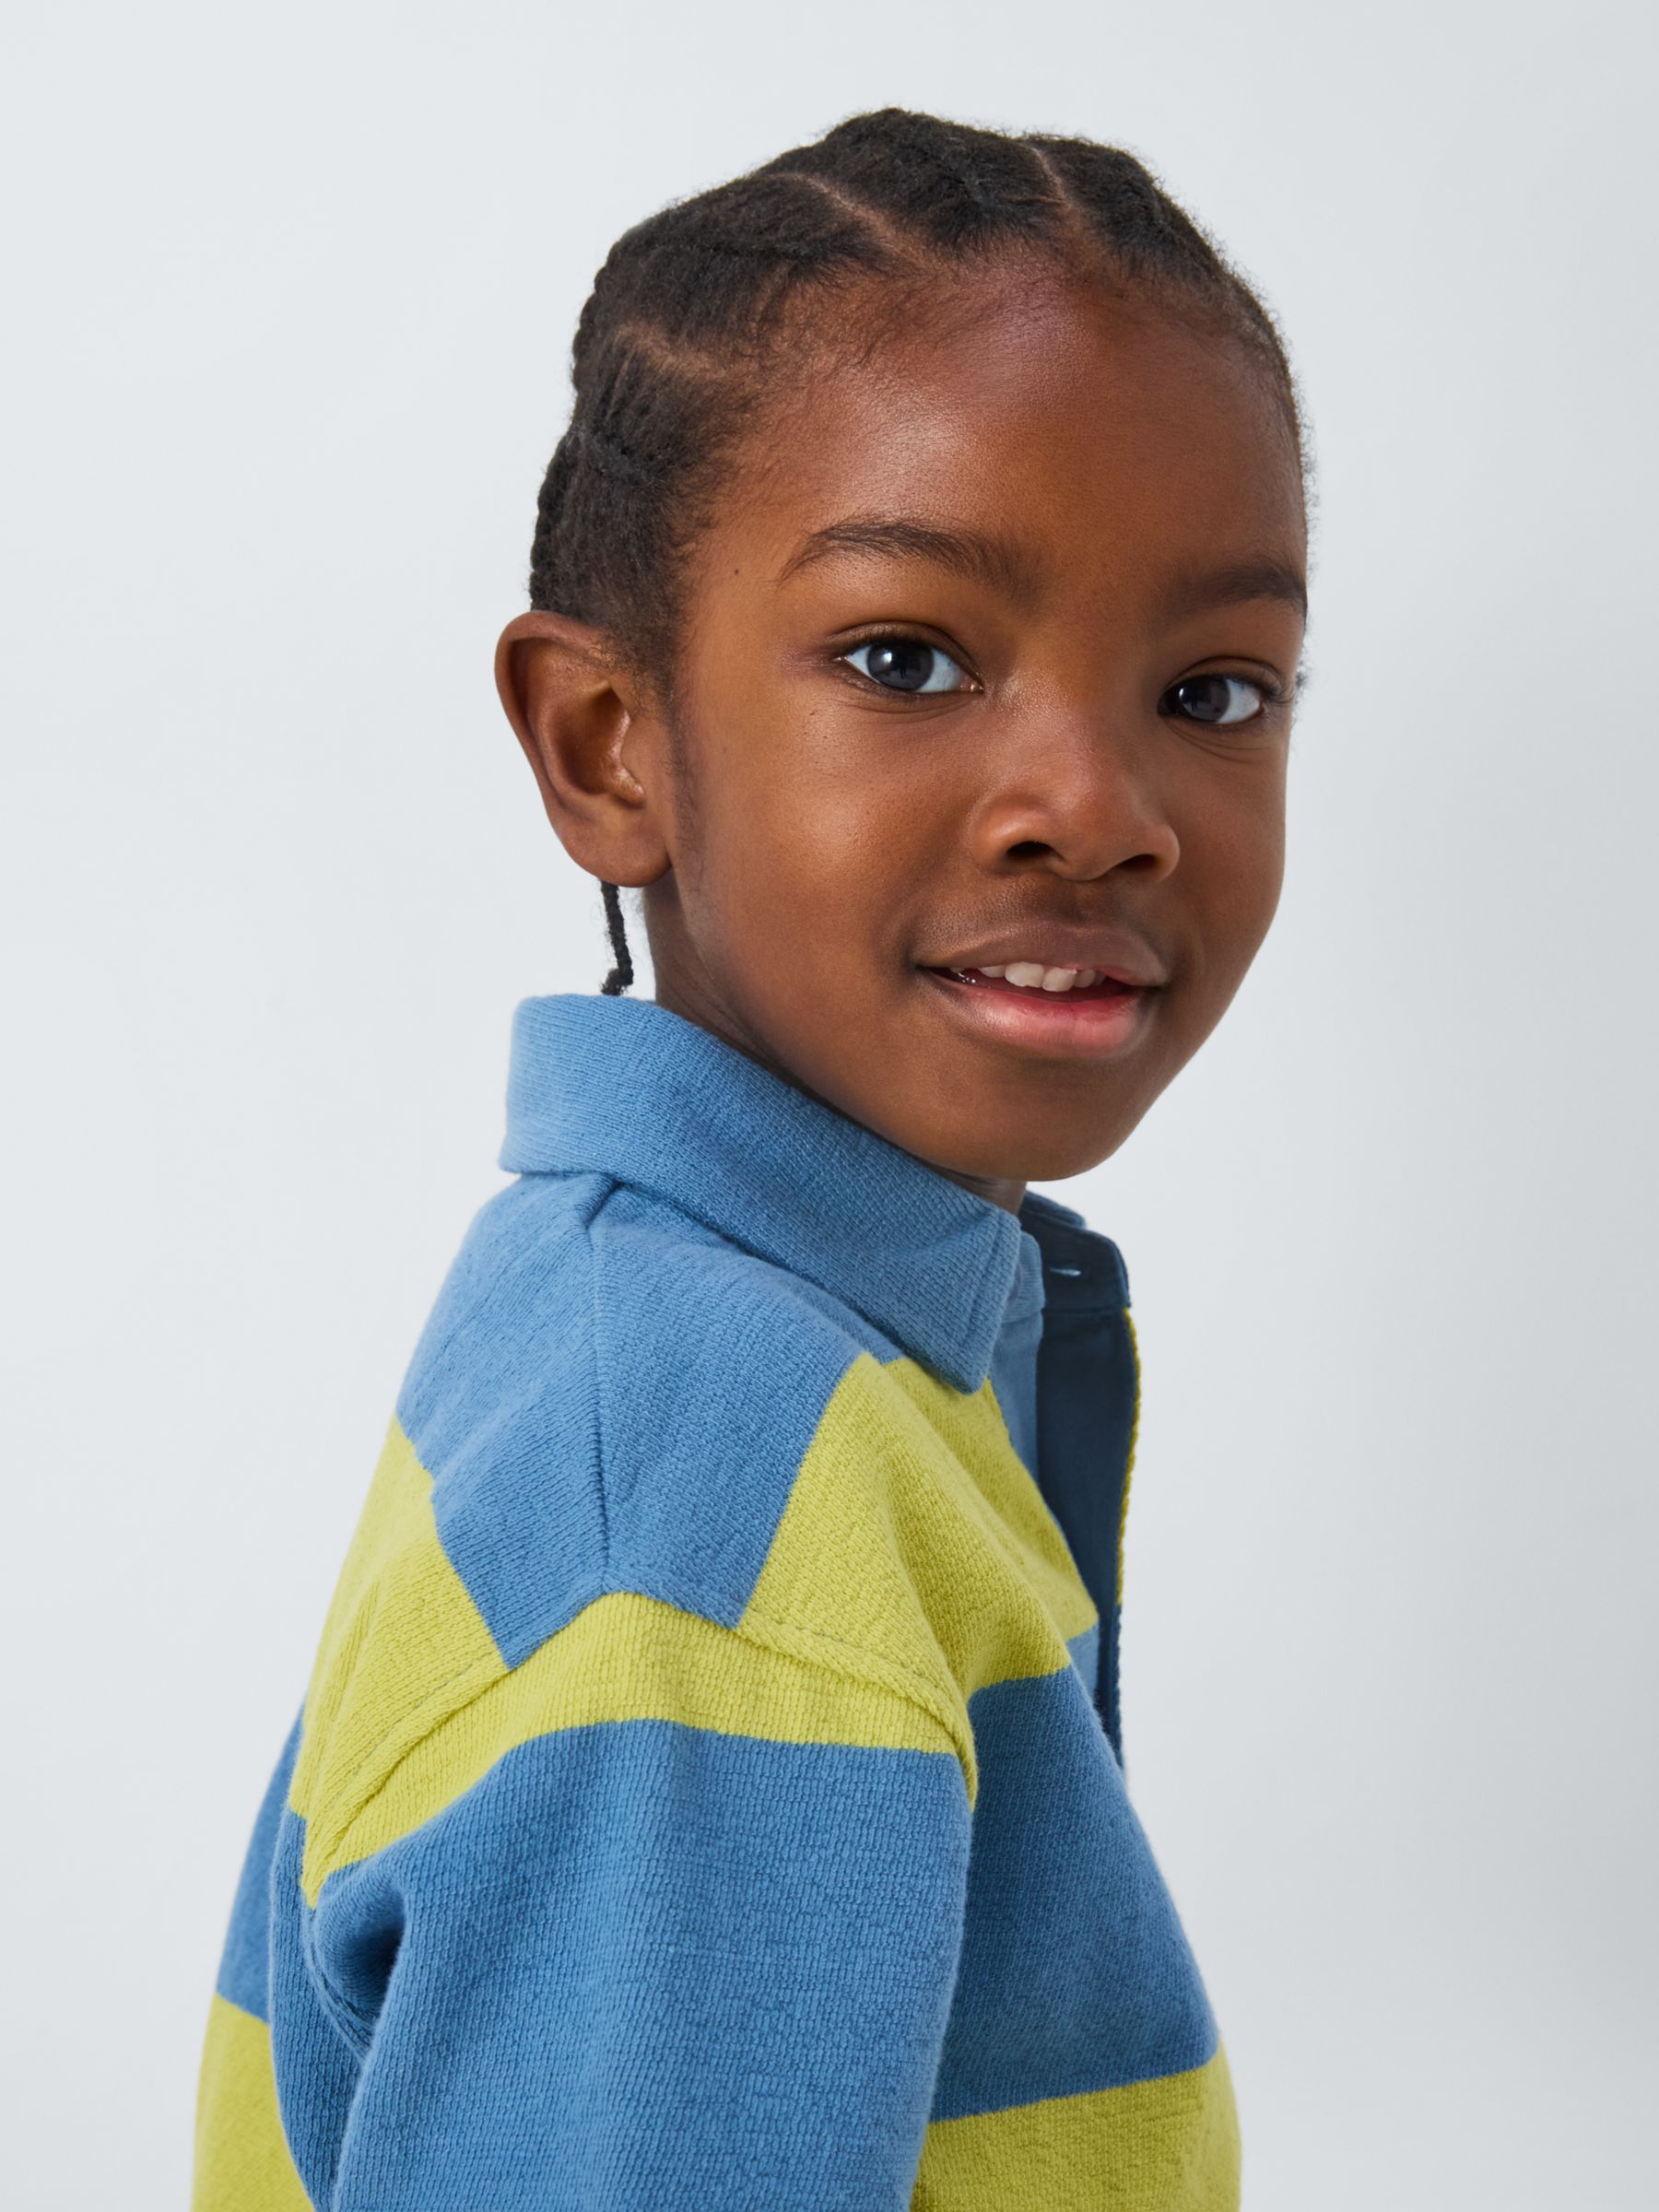 John Lewis Kids' Stripe Short Sleeve Polo Shirt, Yellow/Blue, 7 years